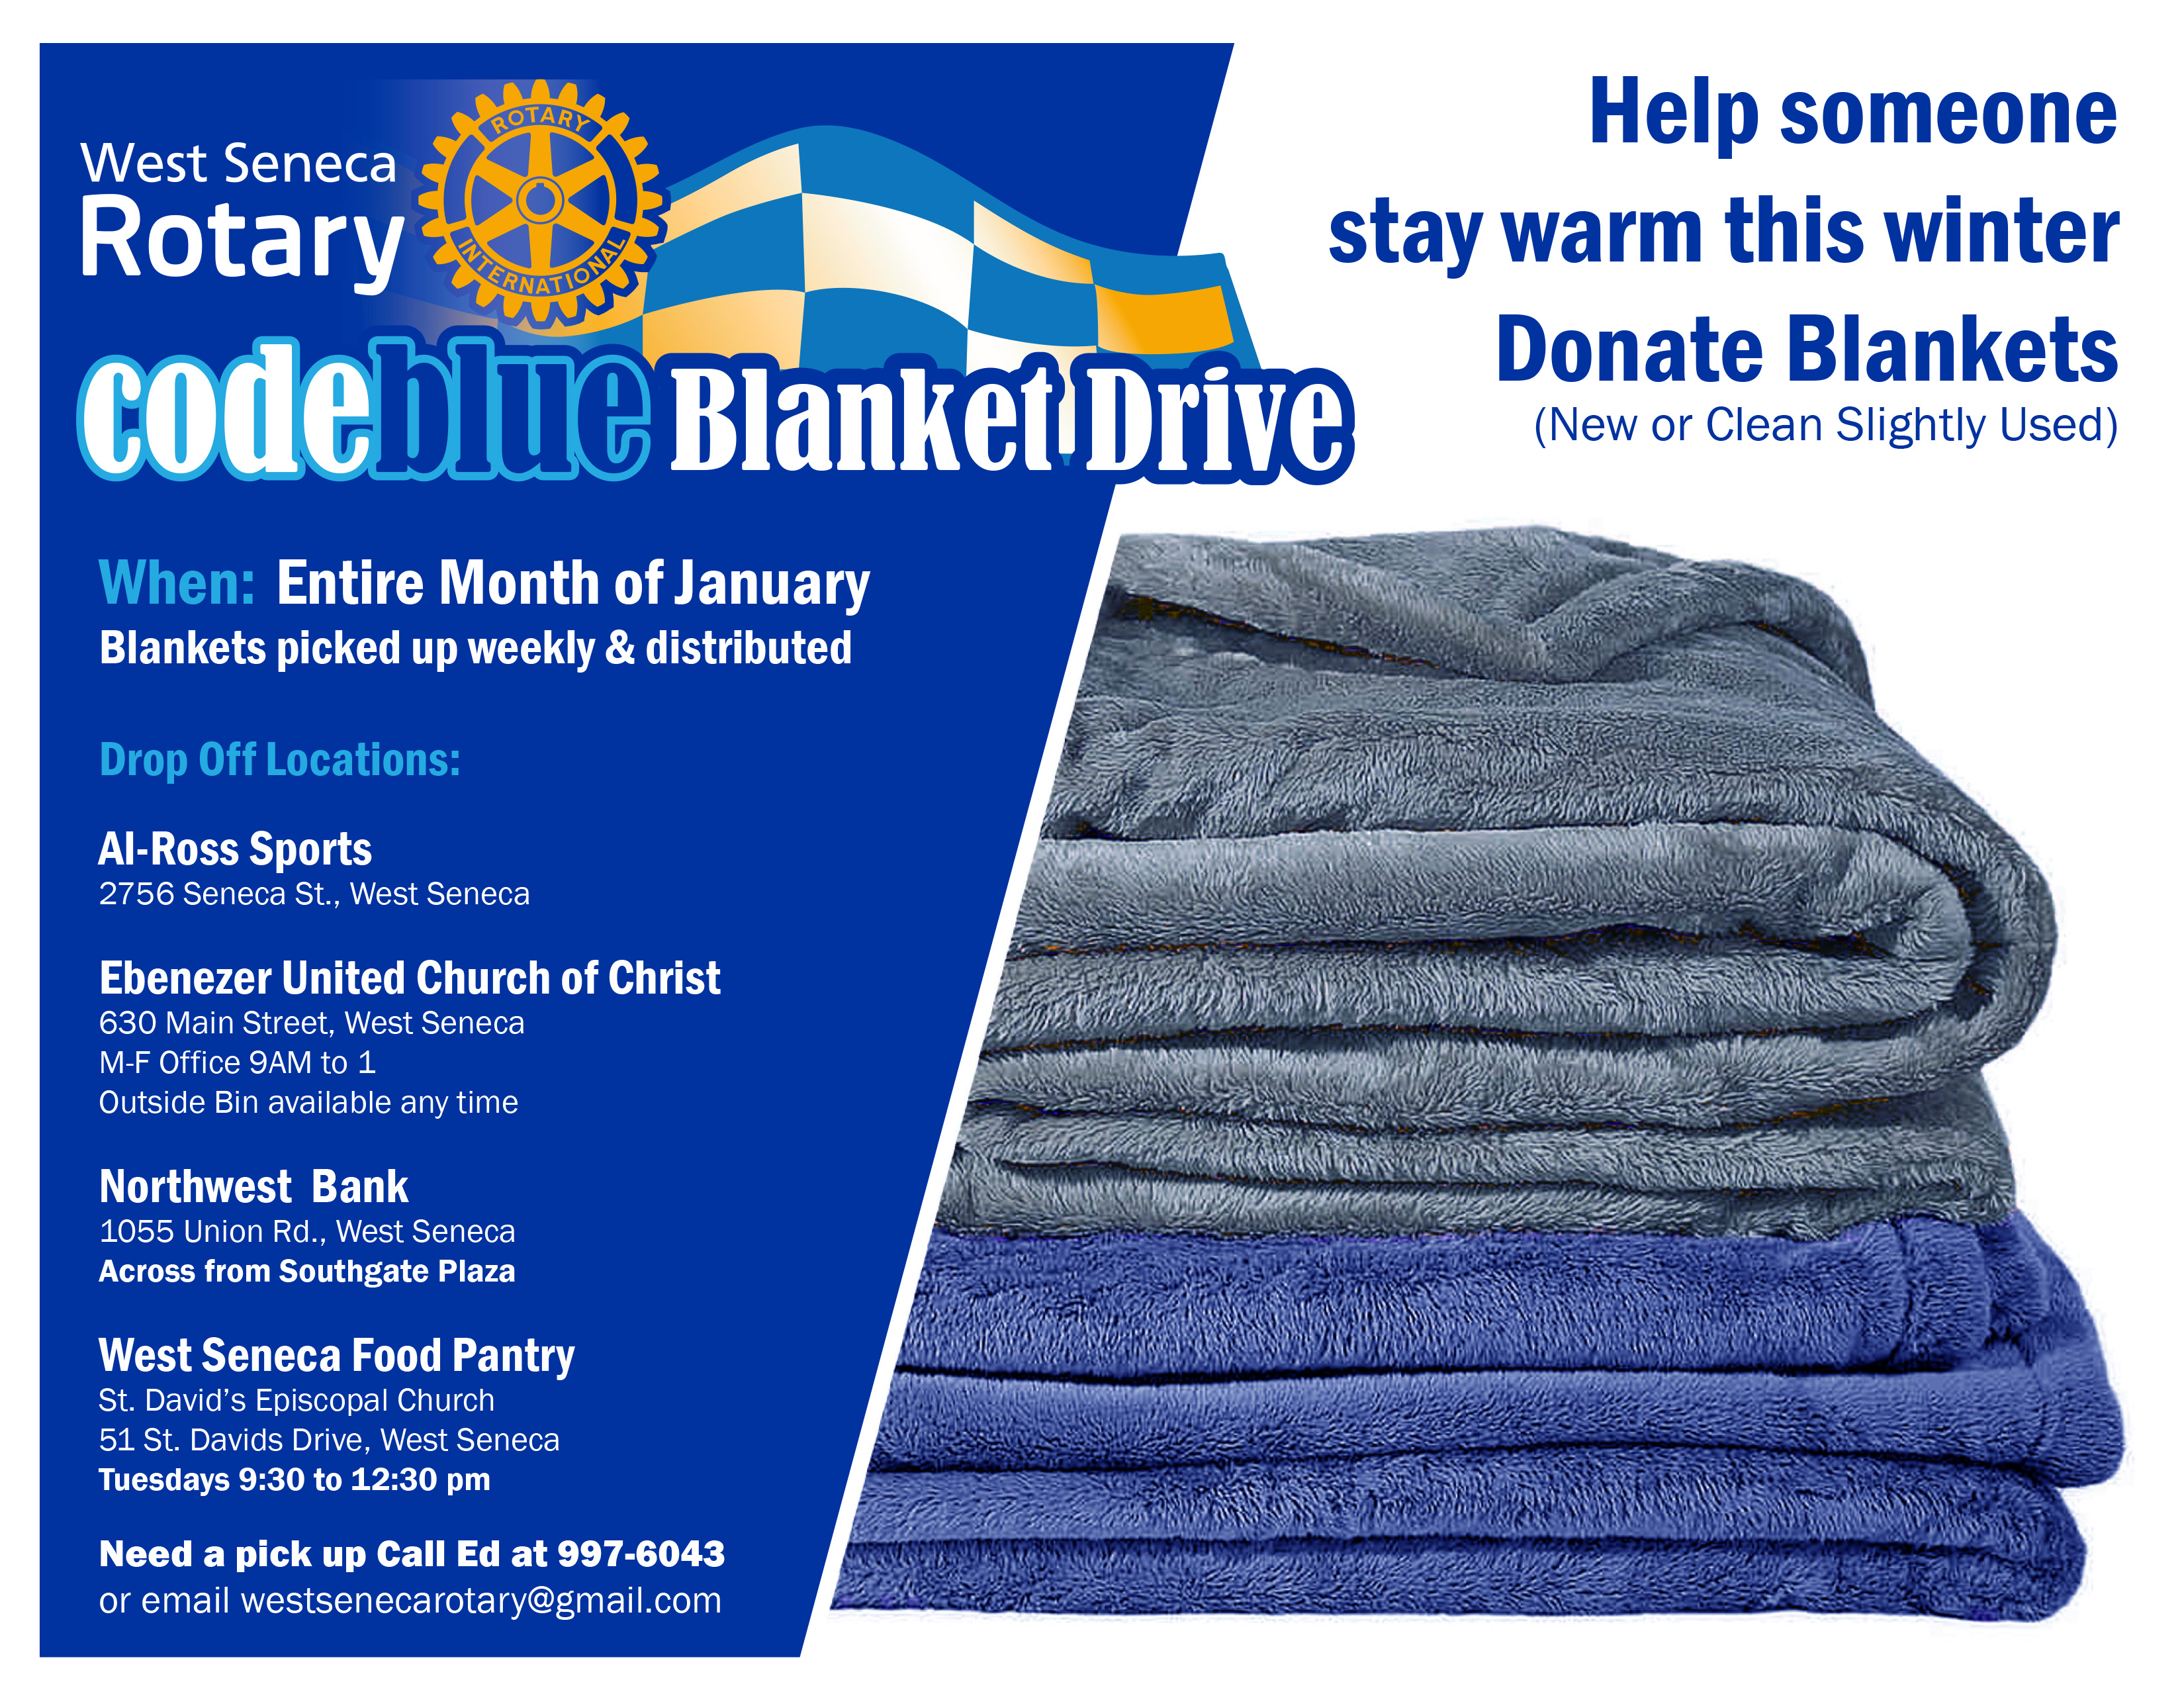 West Seneca Rotary Club holding Code Blue Blanket Drive